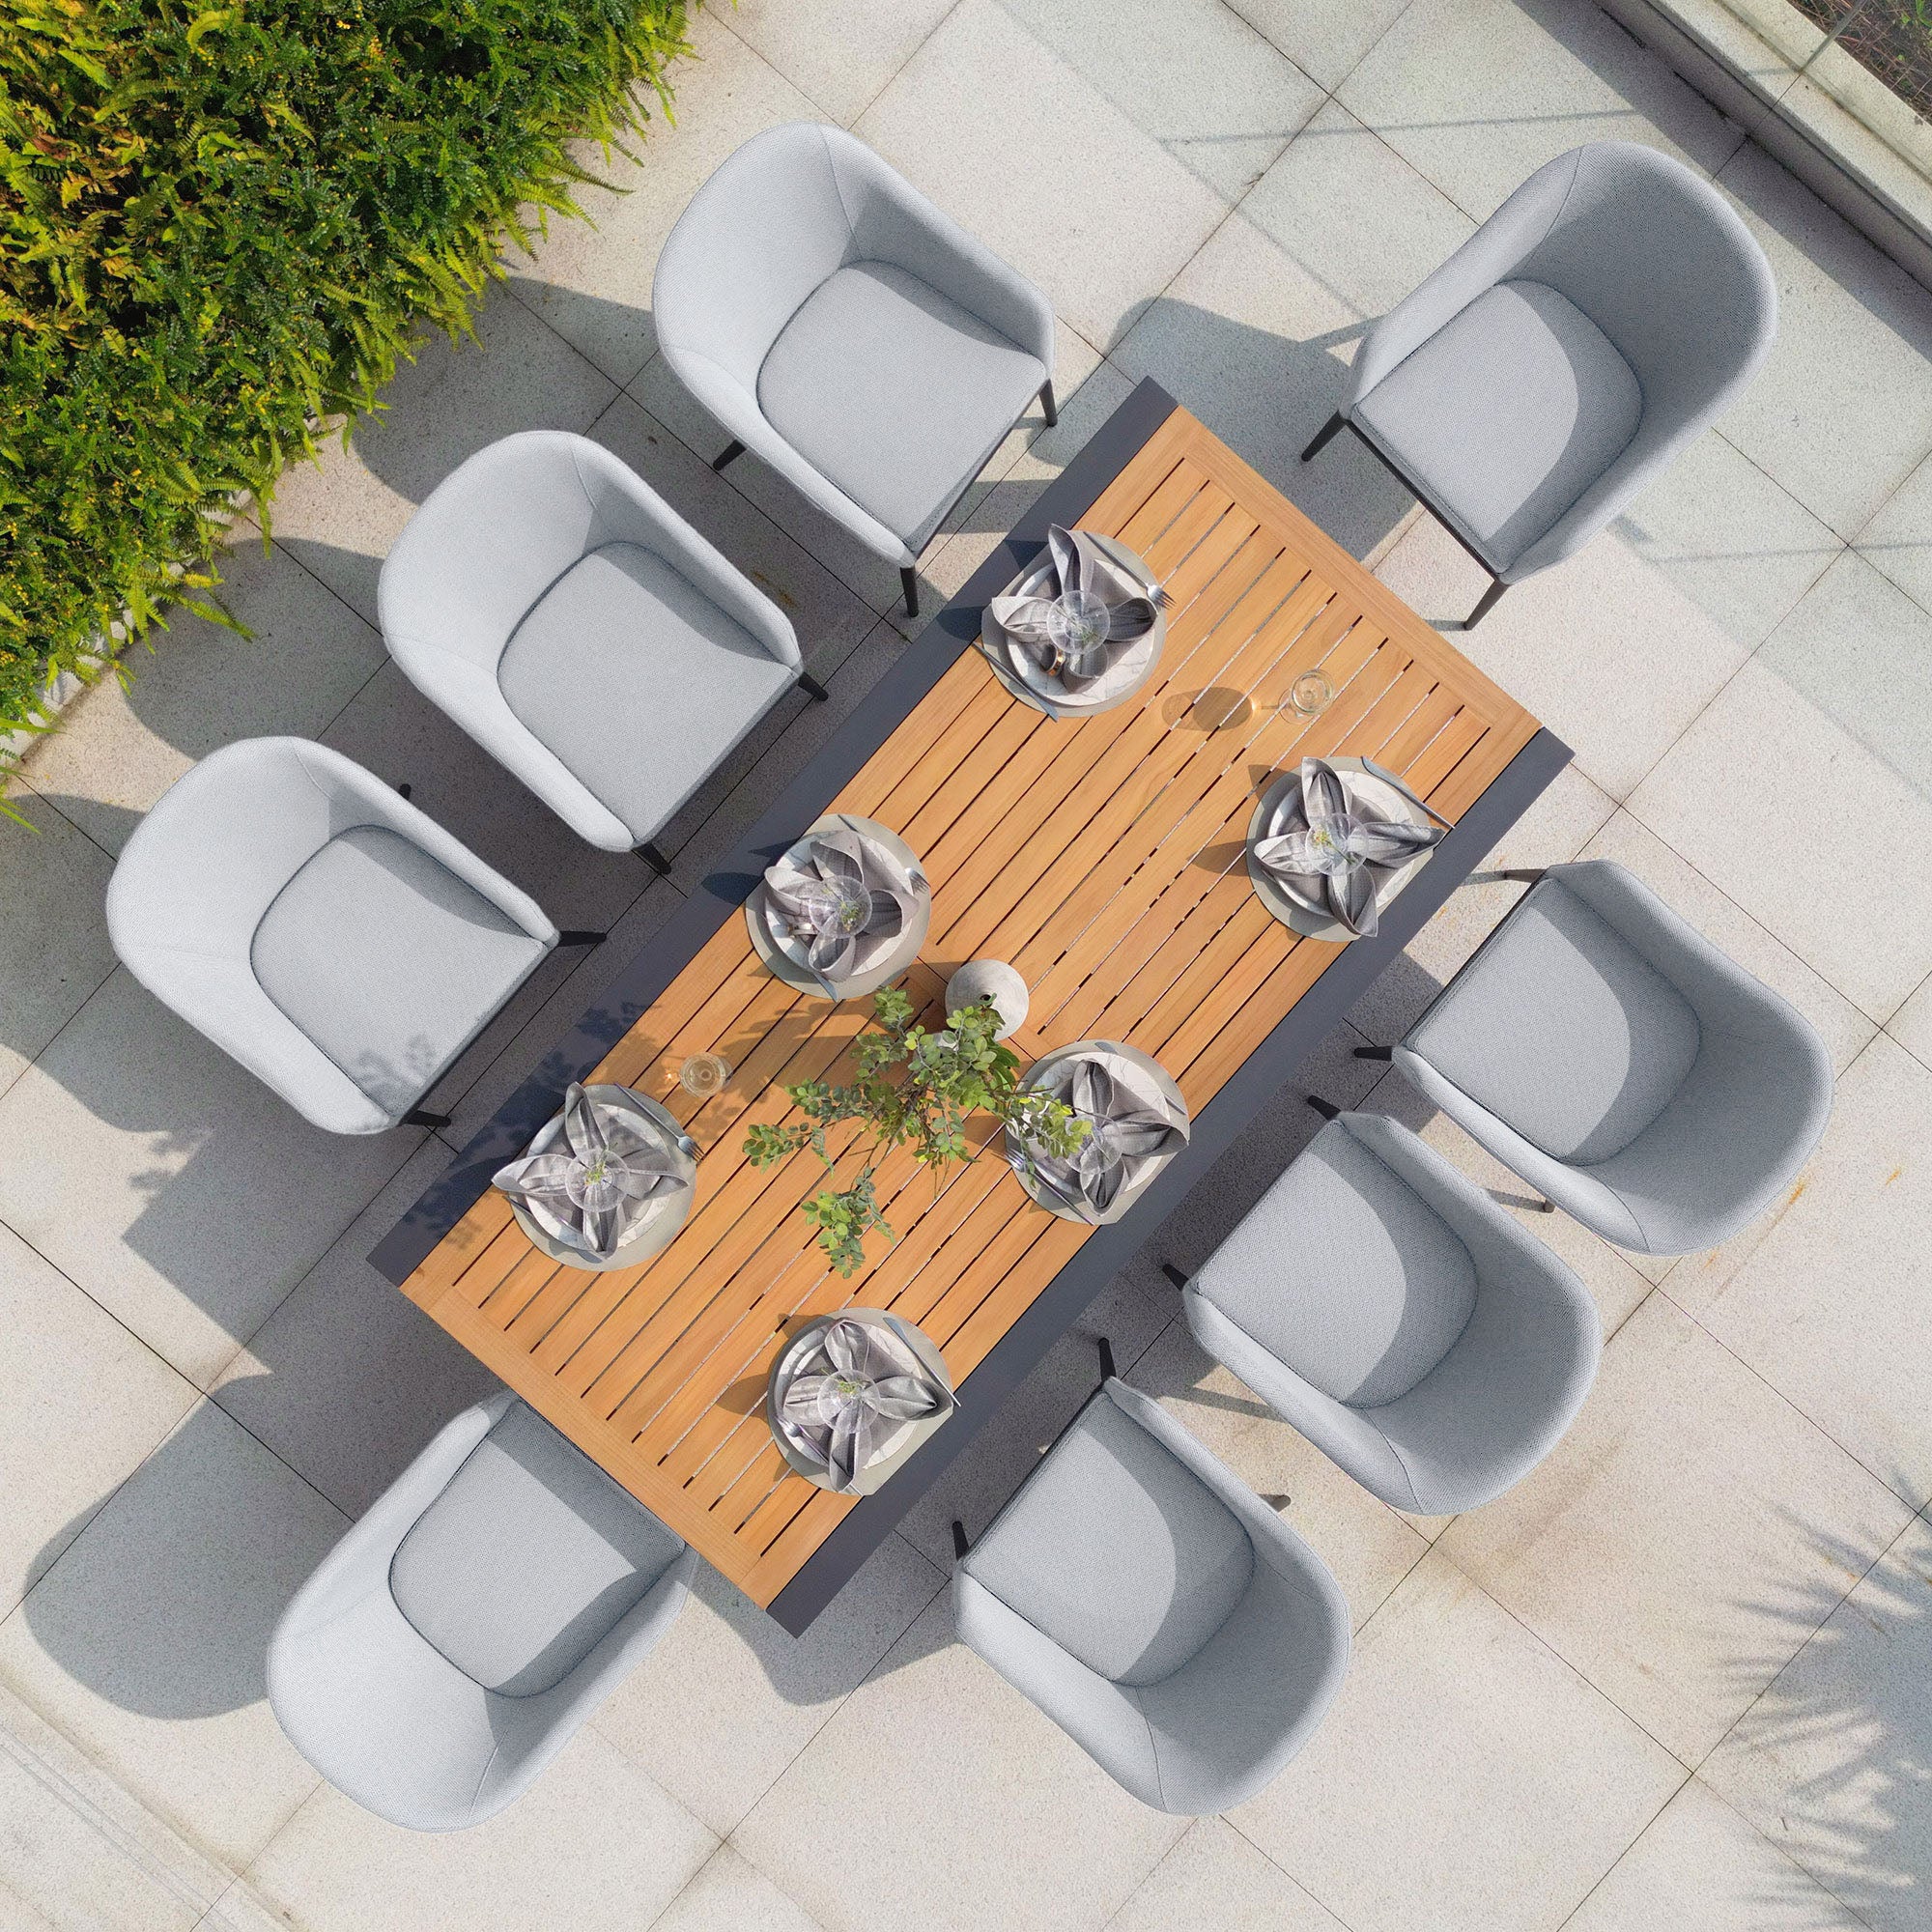 Luna 8 Seat Outdoor Fabric Extending Teak Dining Set in Oyster Grey